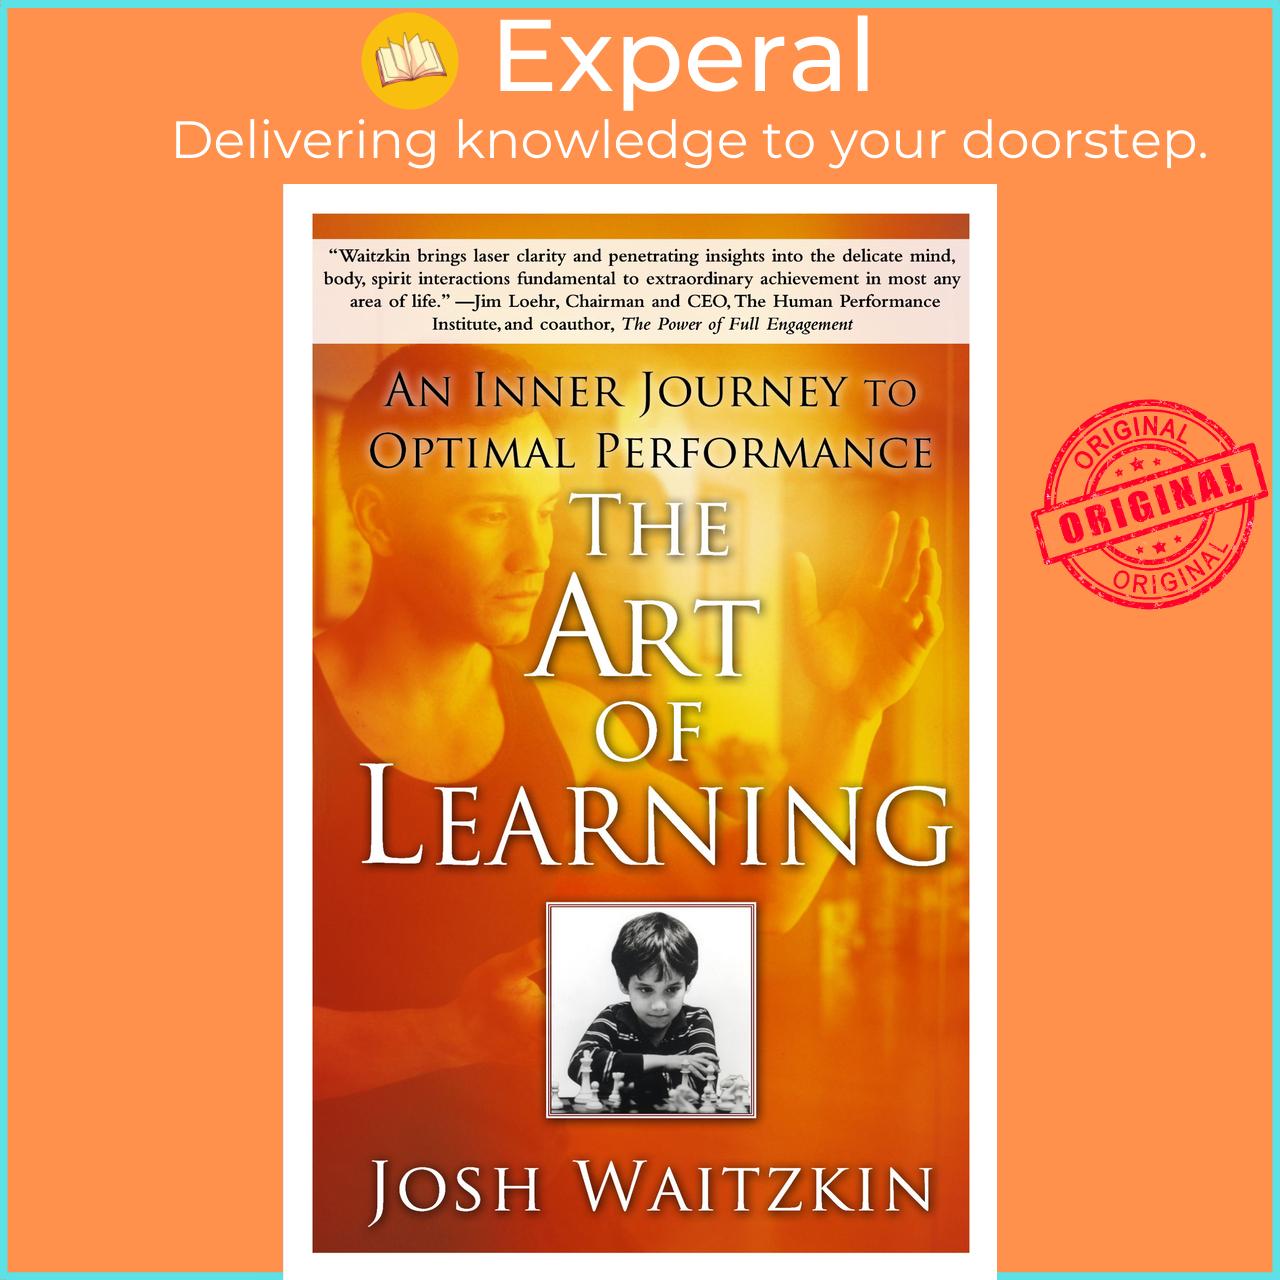  The Art of Learning: An Inner Journey to Optimal